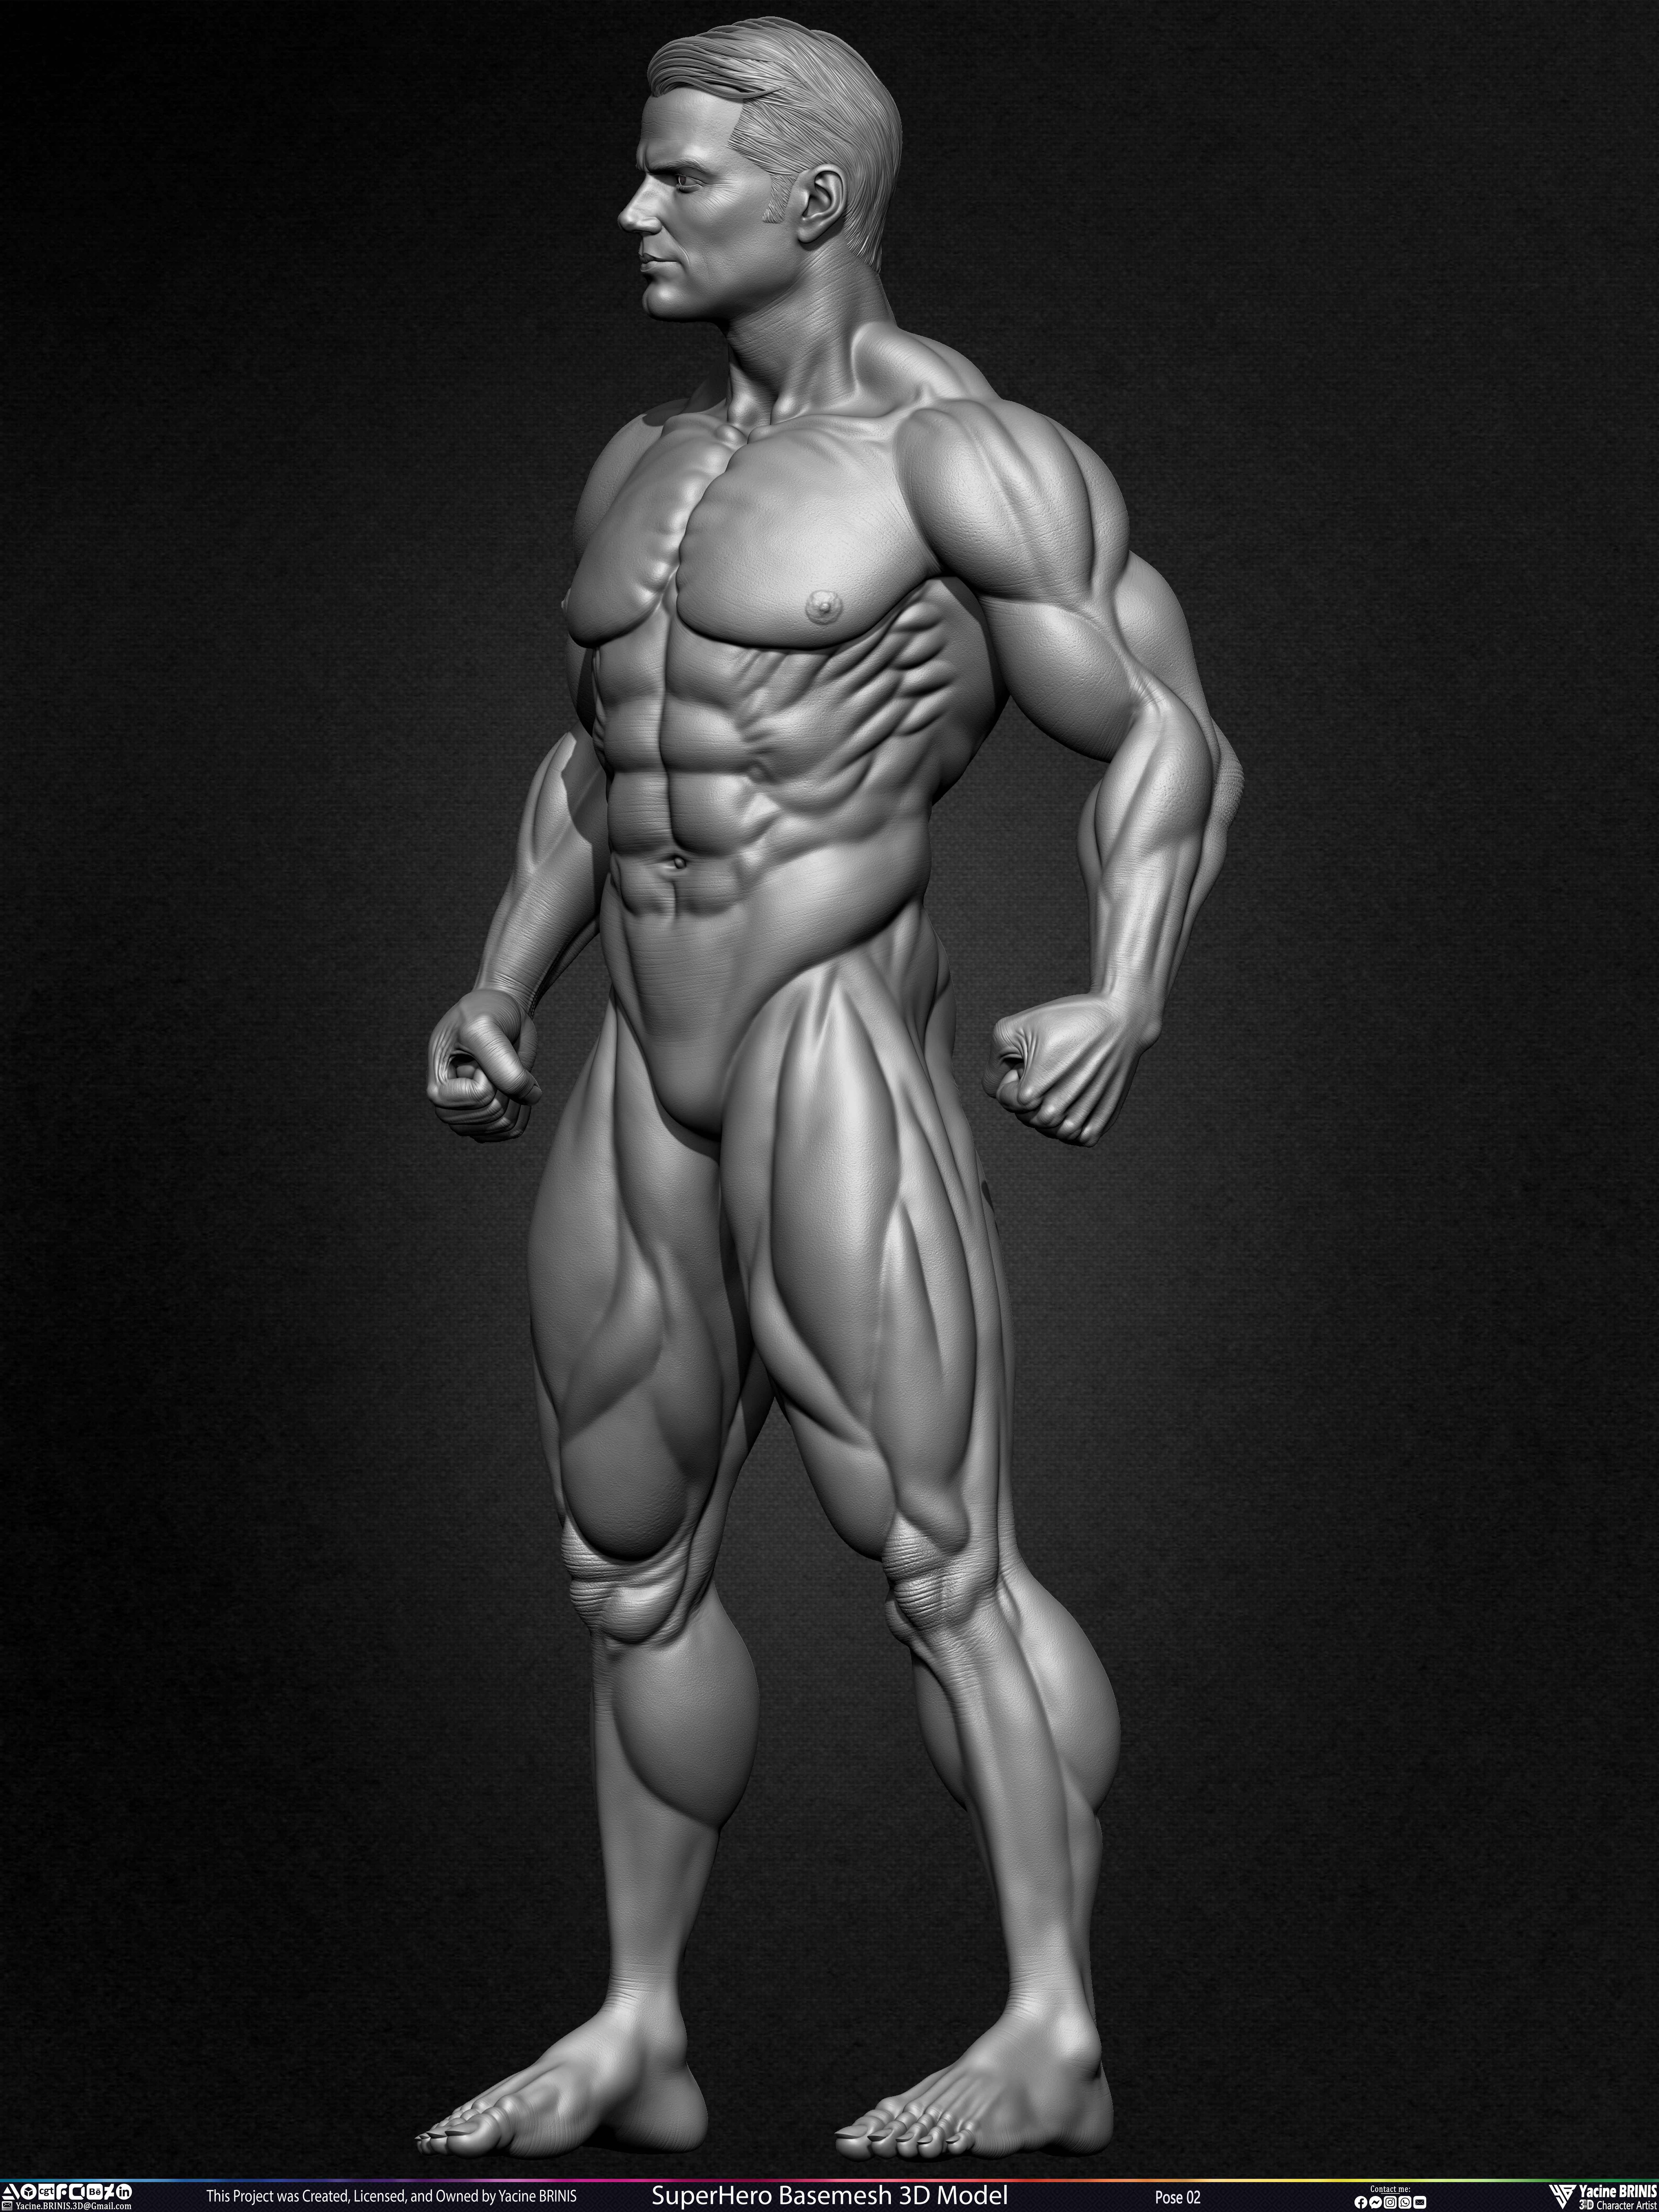 Super-Hero Basemesh 3D Model - Henry Cavill- Man of Steel - Superman - Pose 02 Sculpted by Yacine BRINIS Set 012